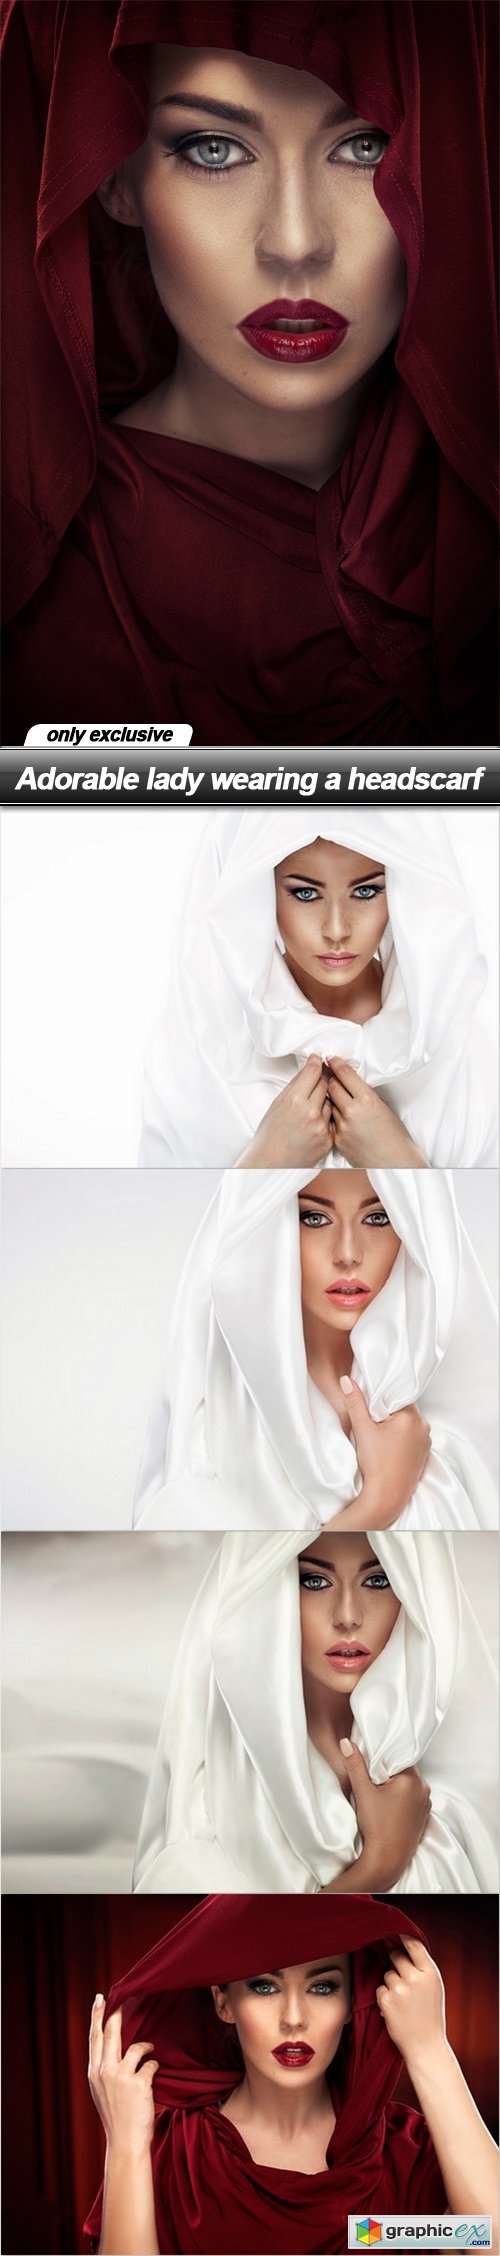 Adorable lady wearing a headscarf - 5 UHQ JPEG